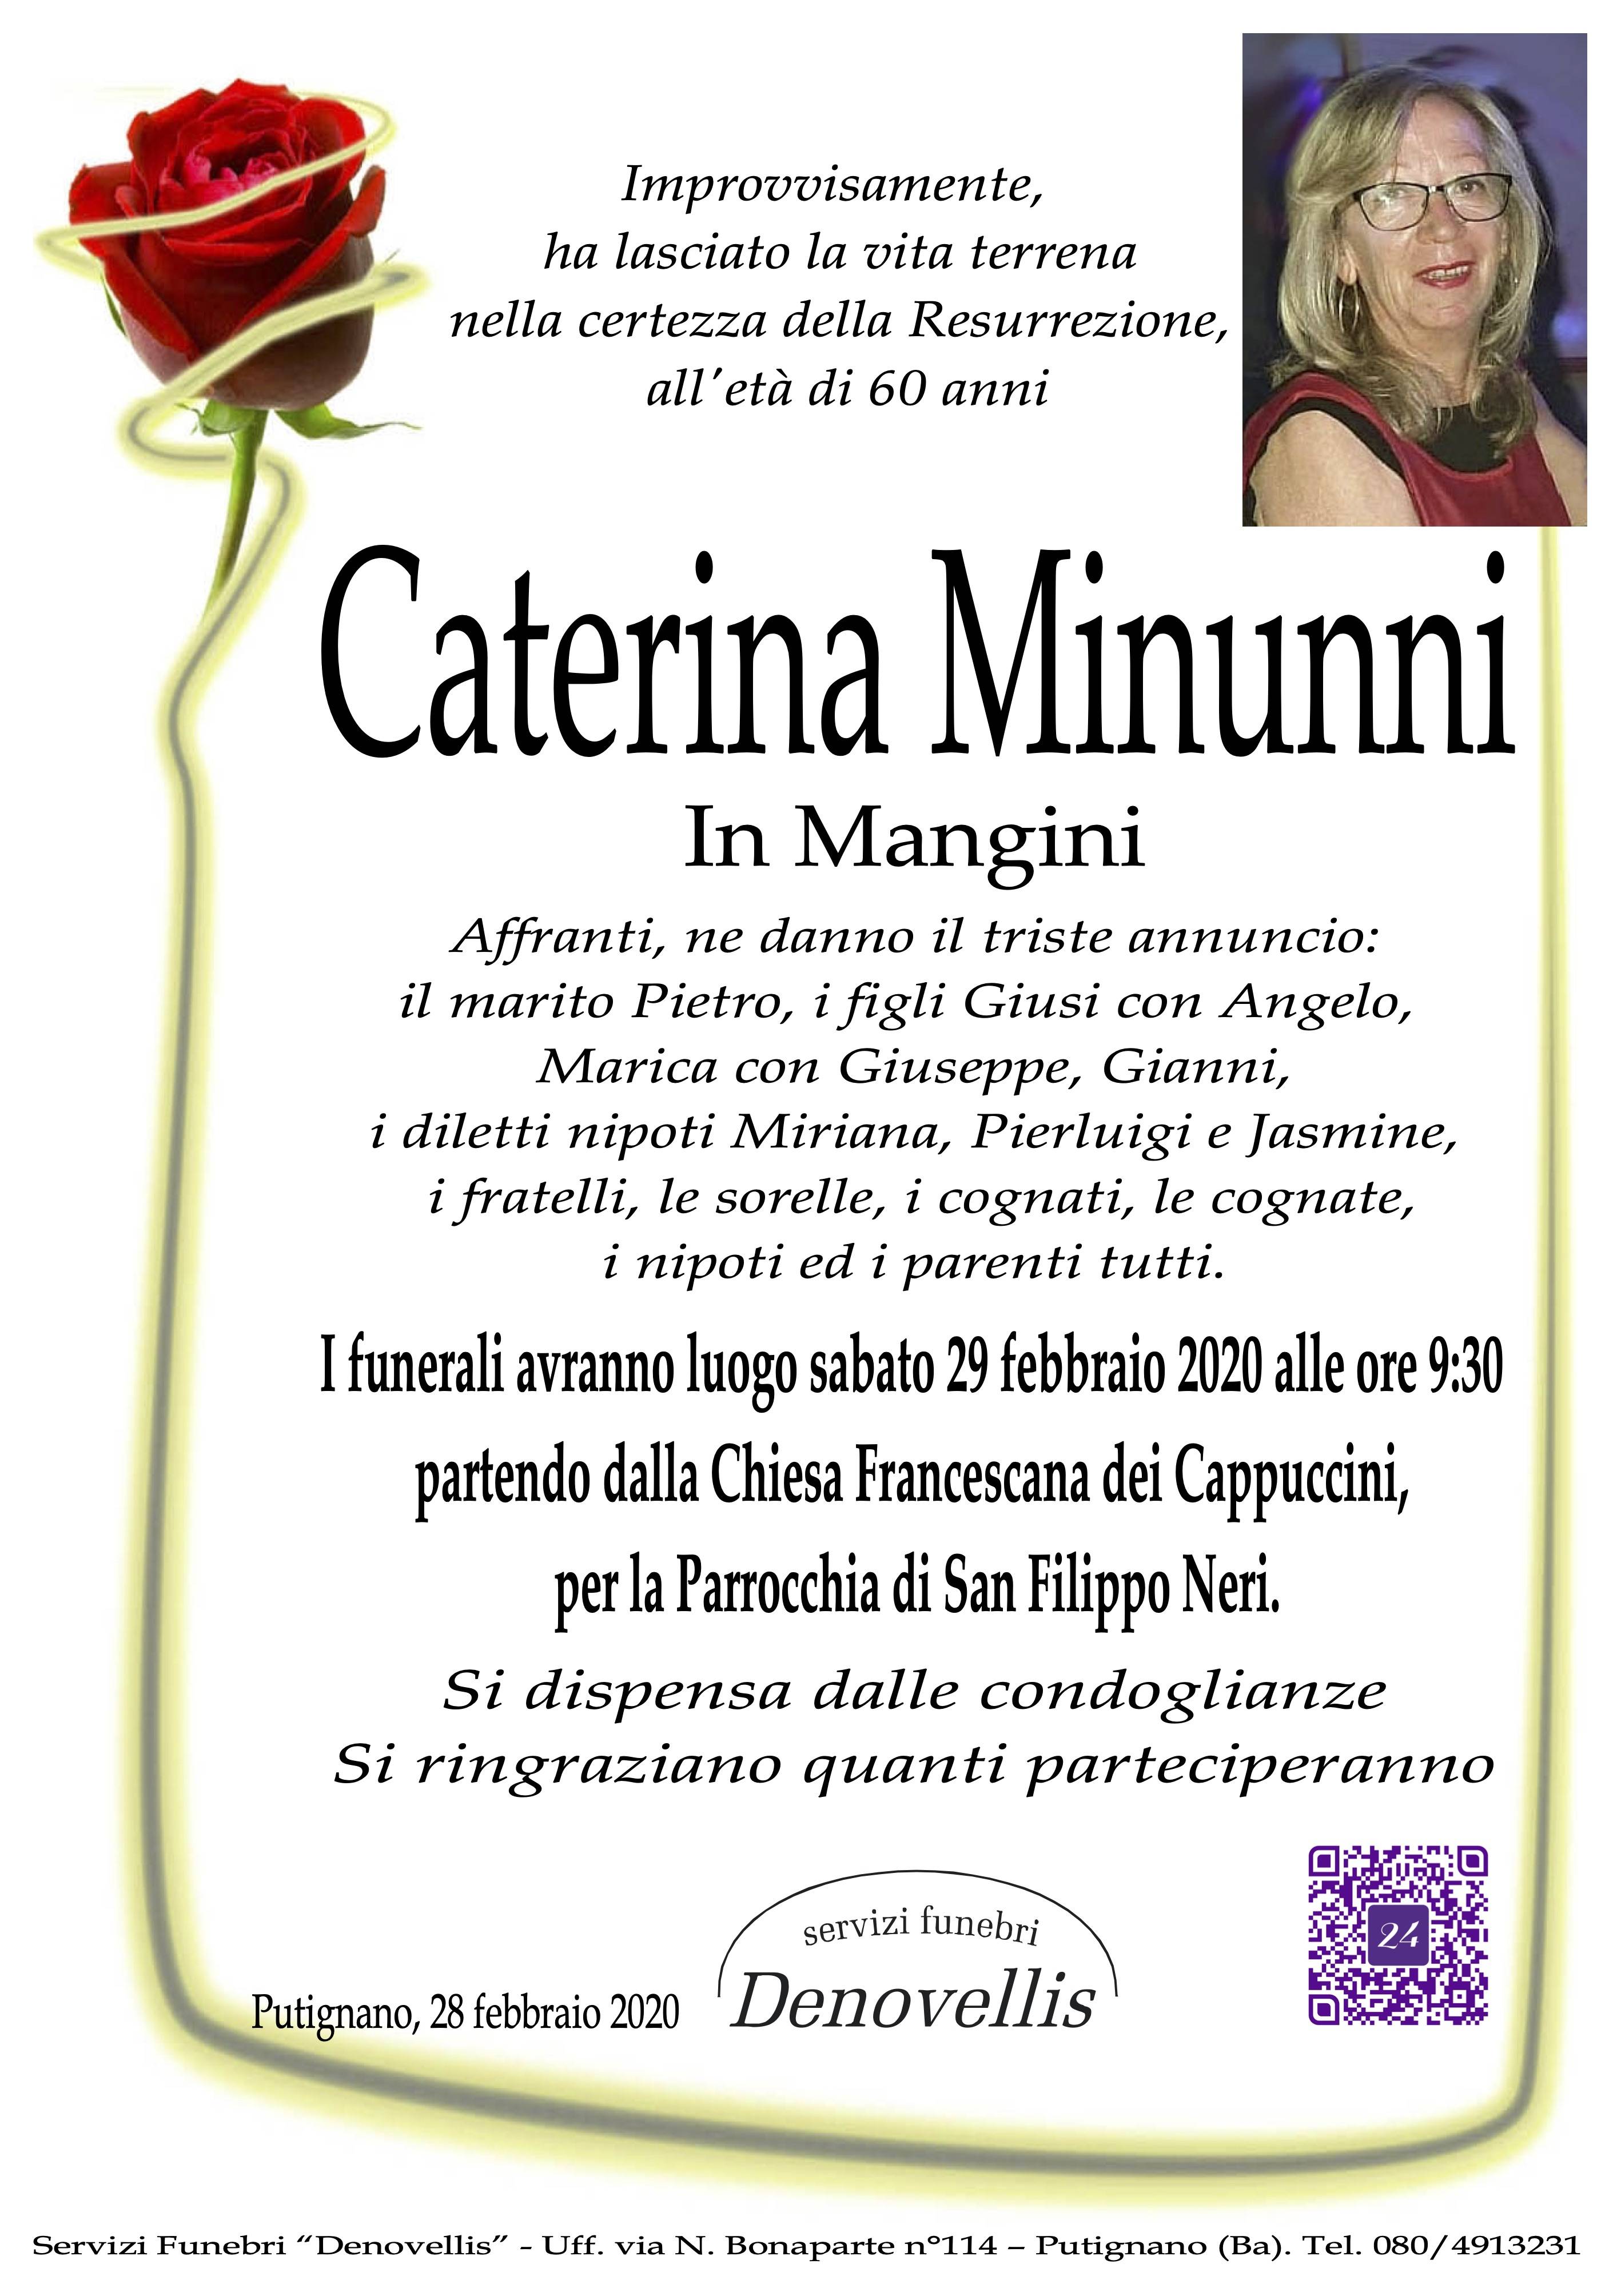 Caterina Minunni